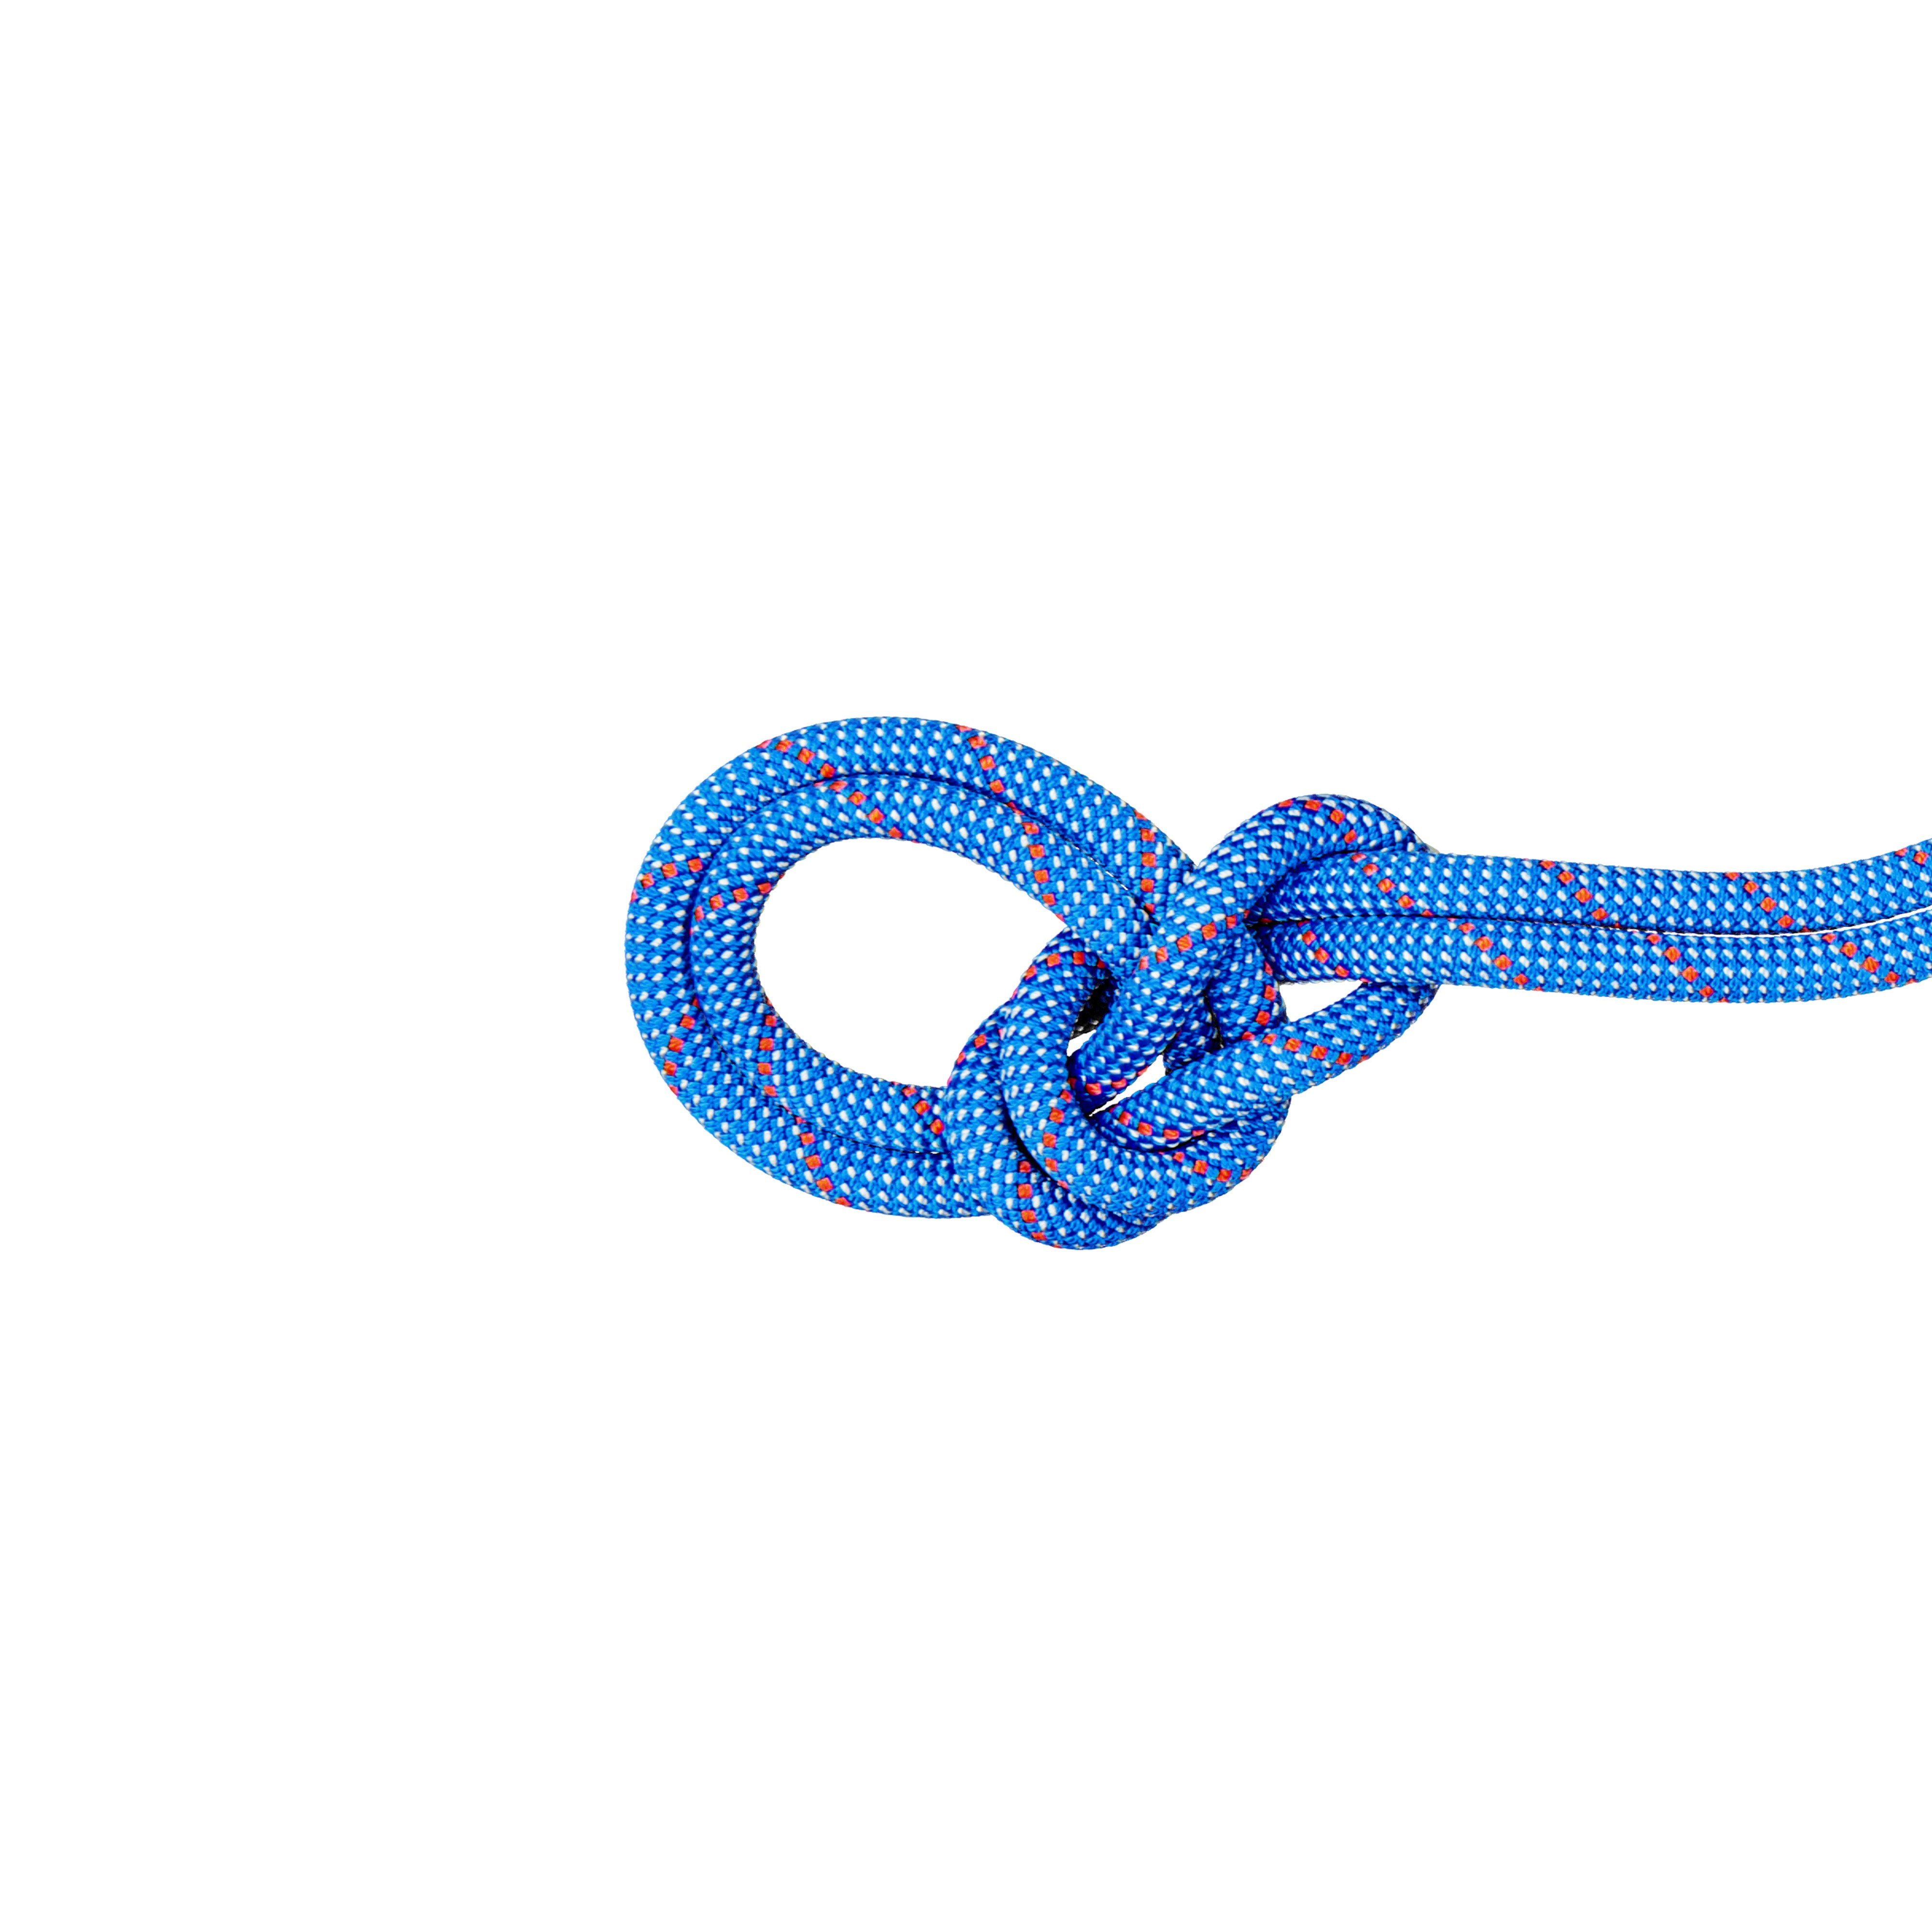 9.5 Crag Classic Rope - Classic Standard, blue-white, 50 m thumbnail